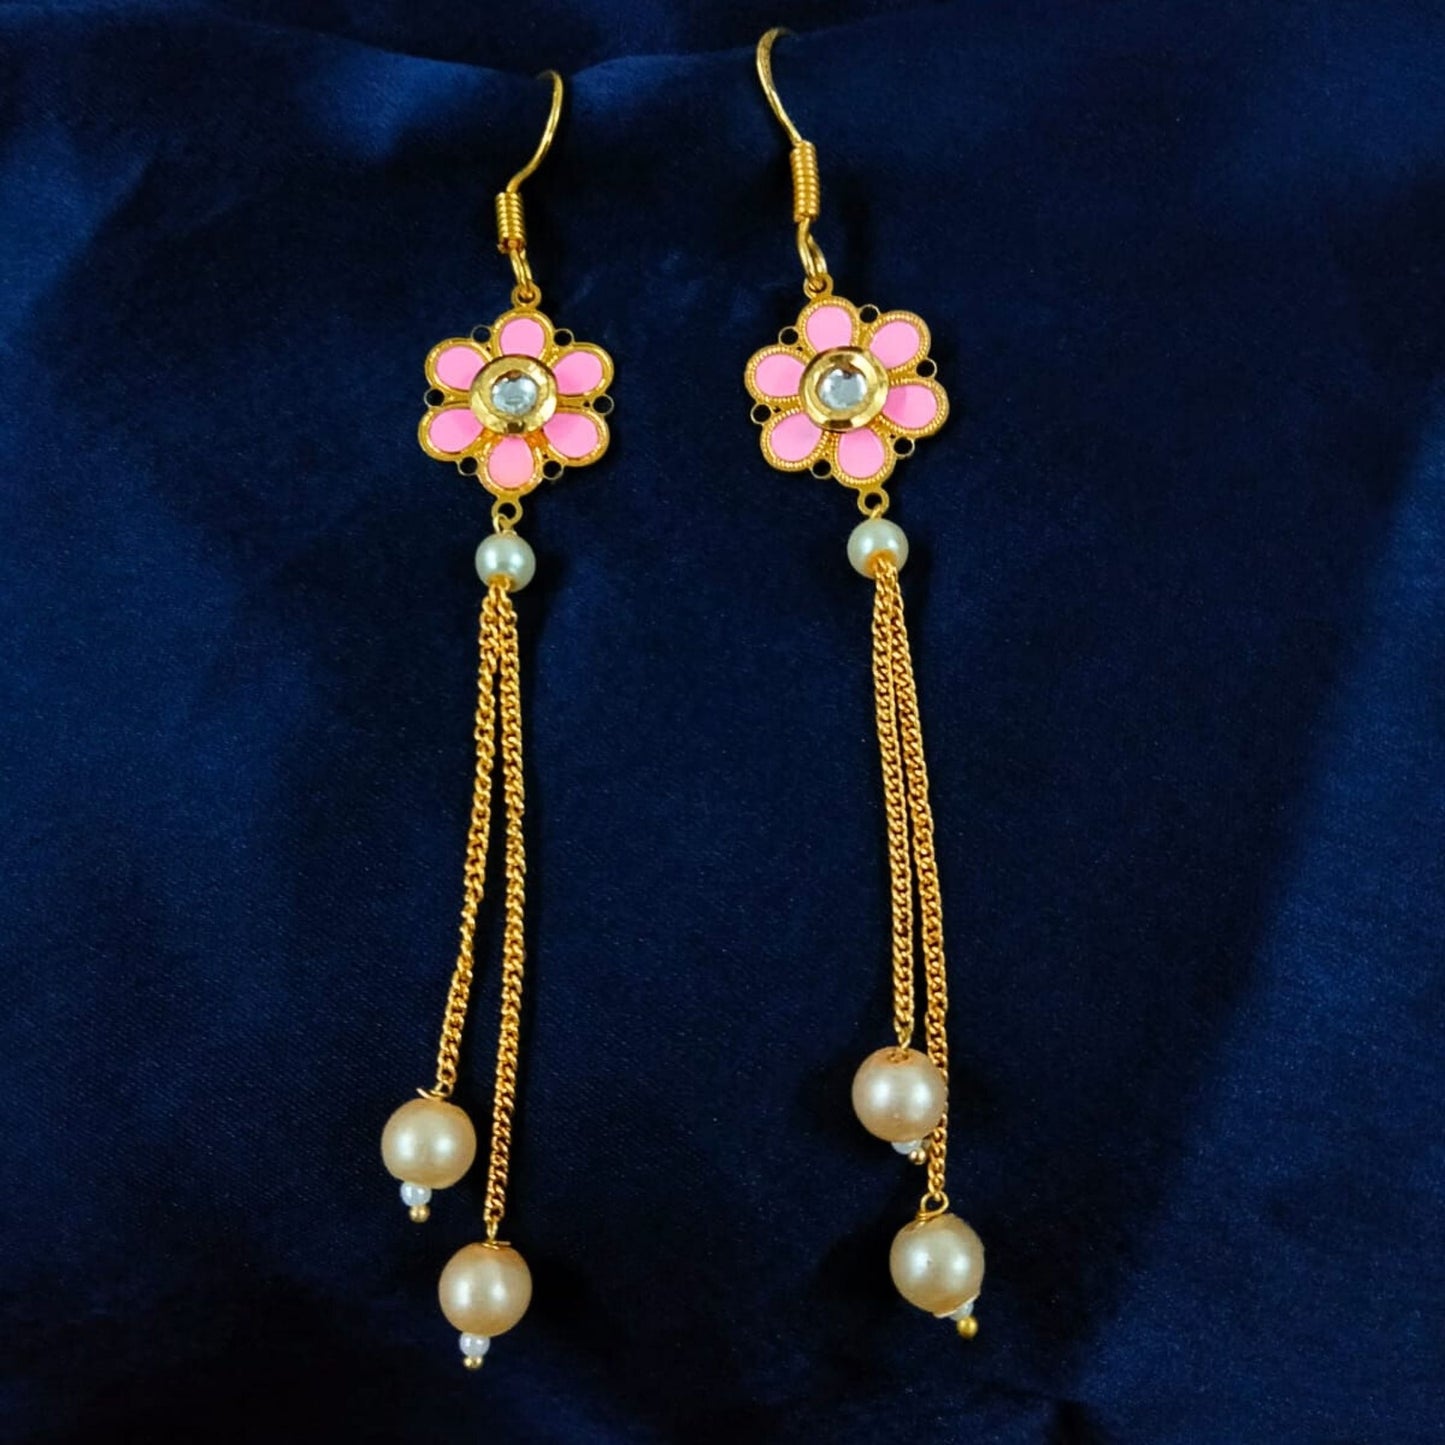 Bdiva 18K Gold Plated Kundan Dangler Earrings with Semi Cultured Pearls.